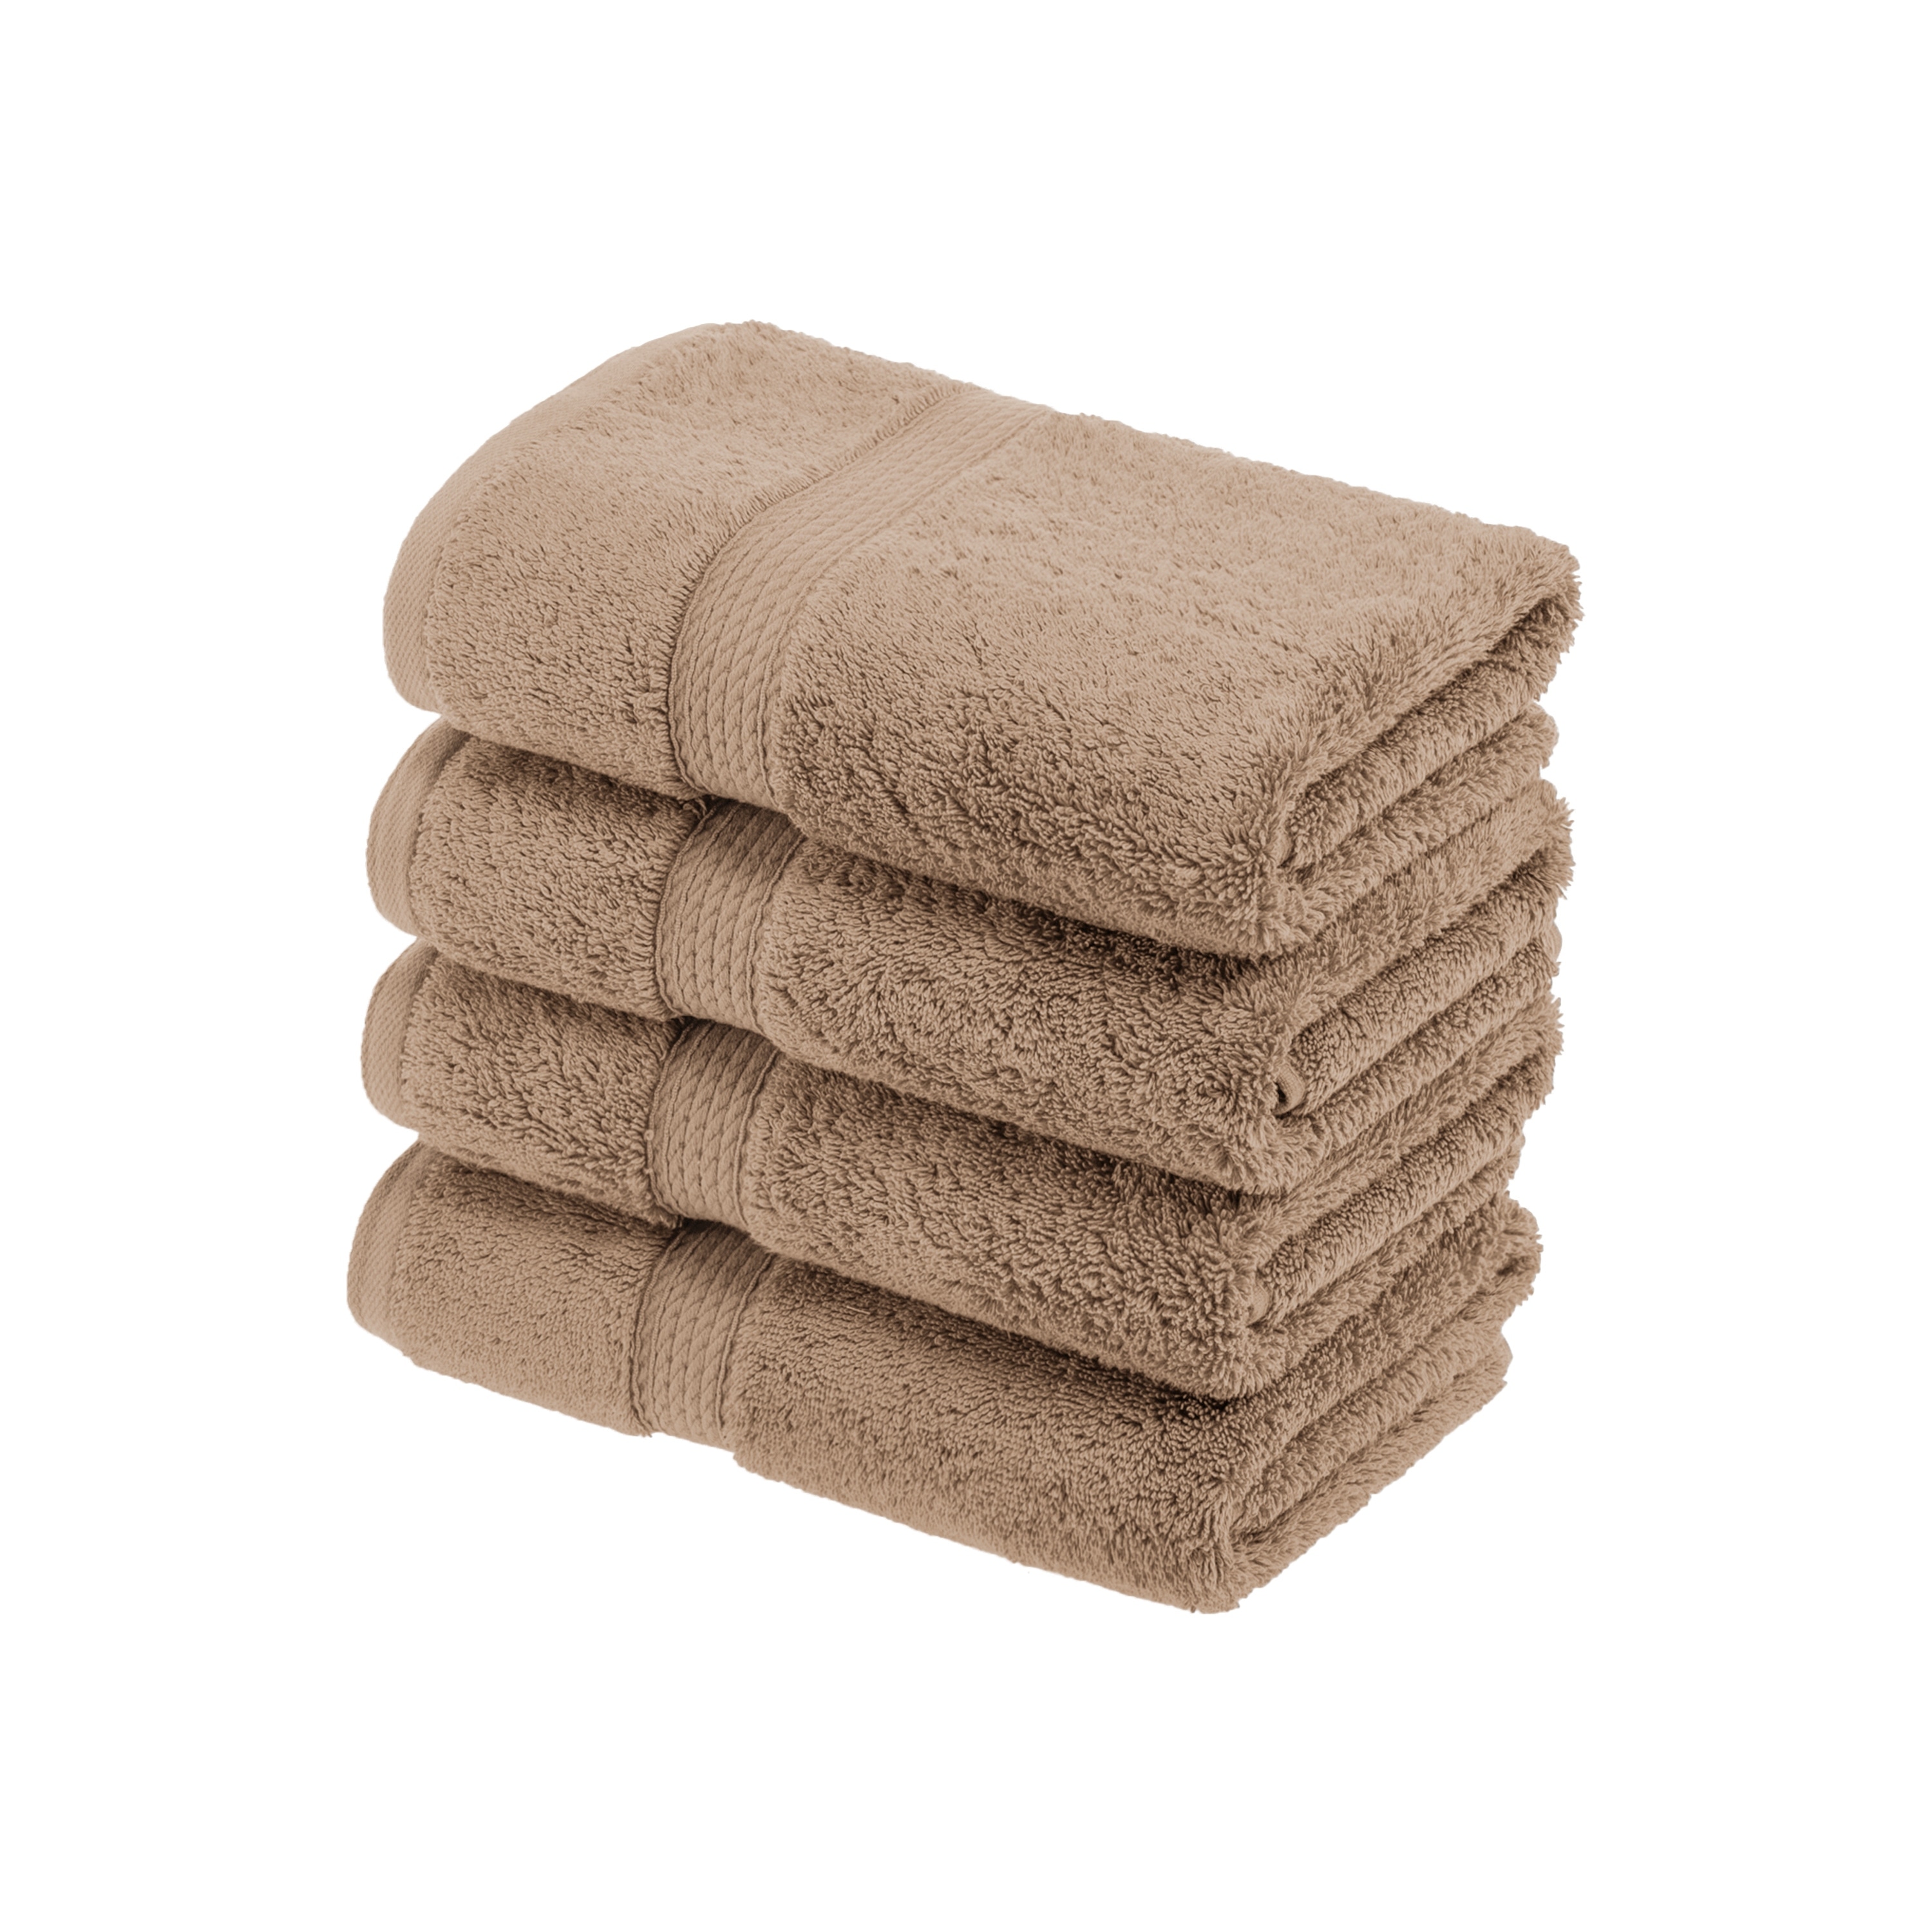 Superior 900 GSM Egyptian Cotton 10-Piece Towel Set on sale at shophq.com -  491-217